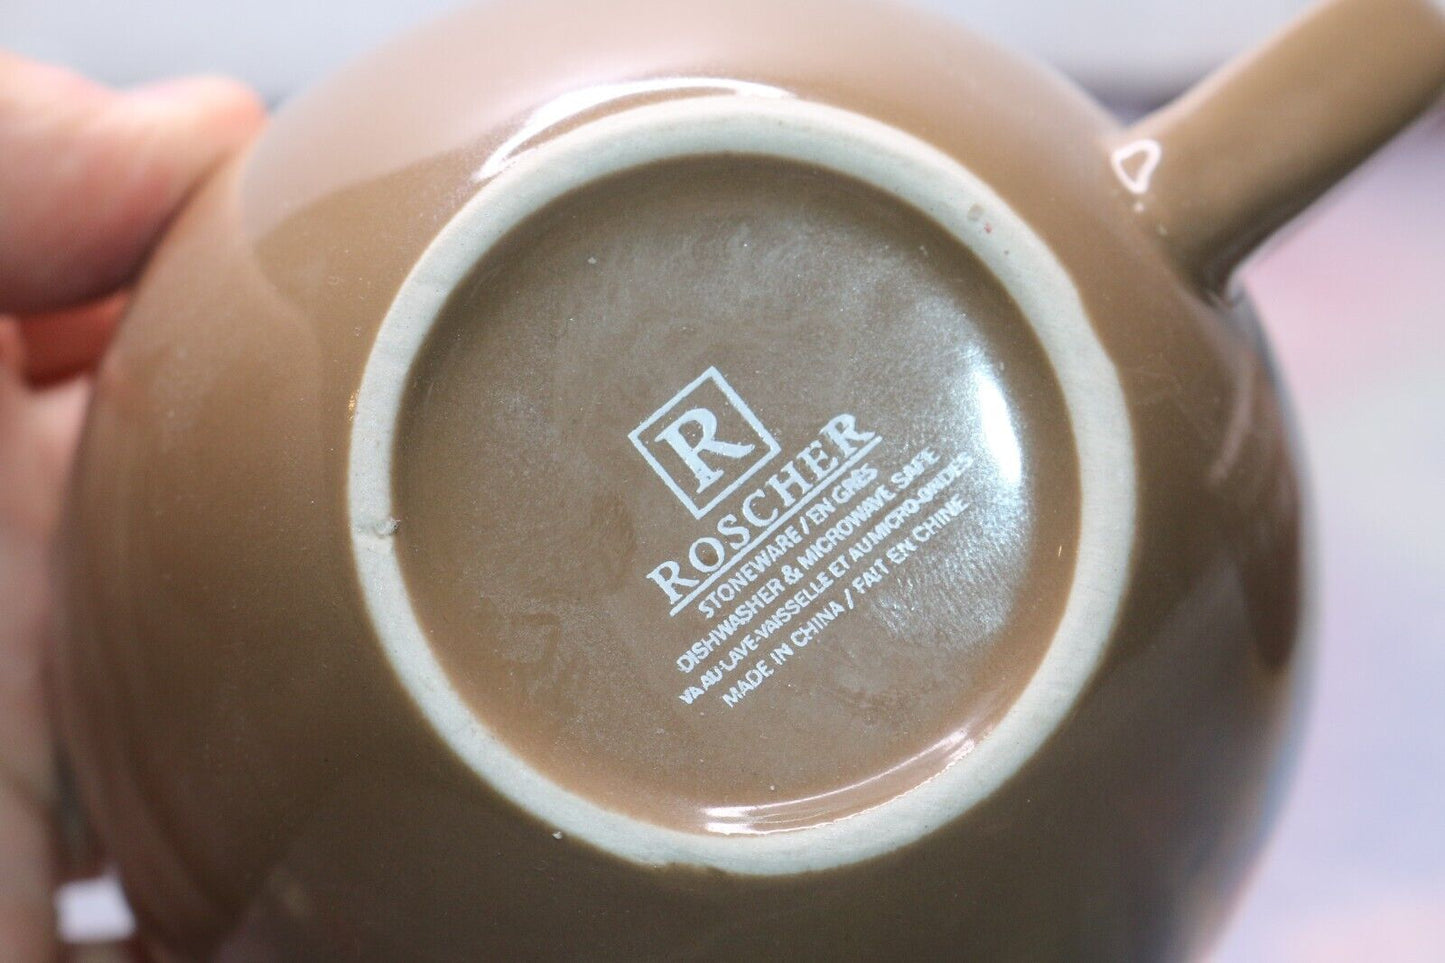 Roscher Stoneware Cappuccino Mug Cup Brown 10 Oz